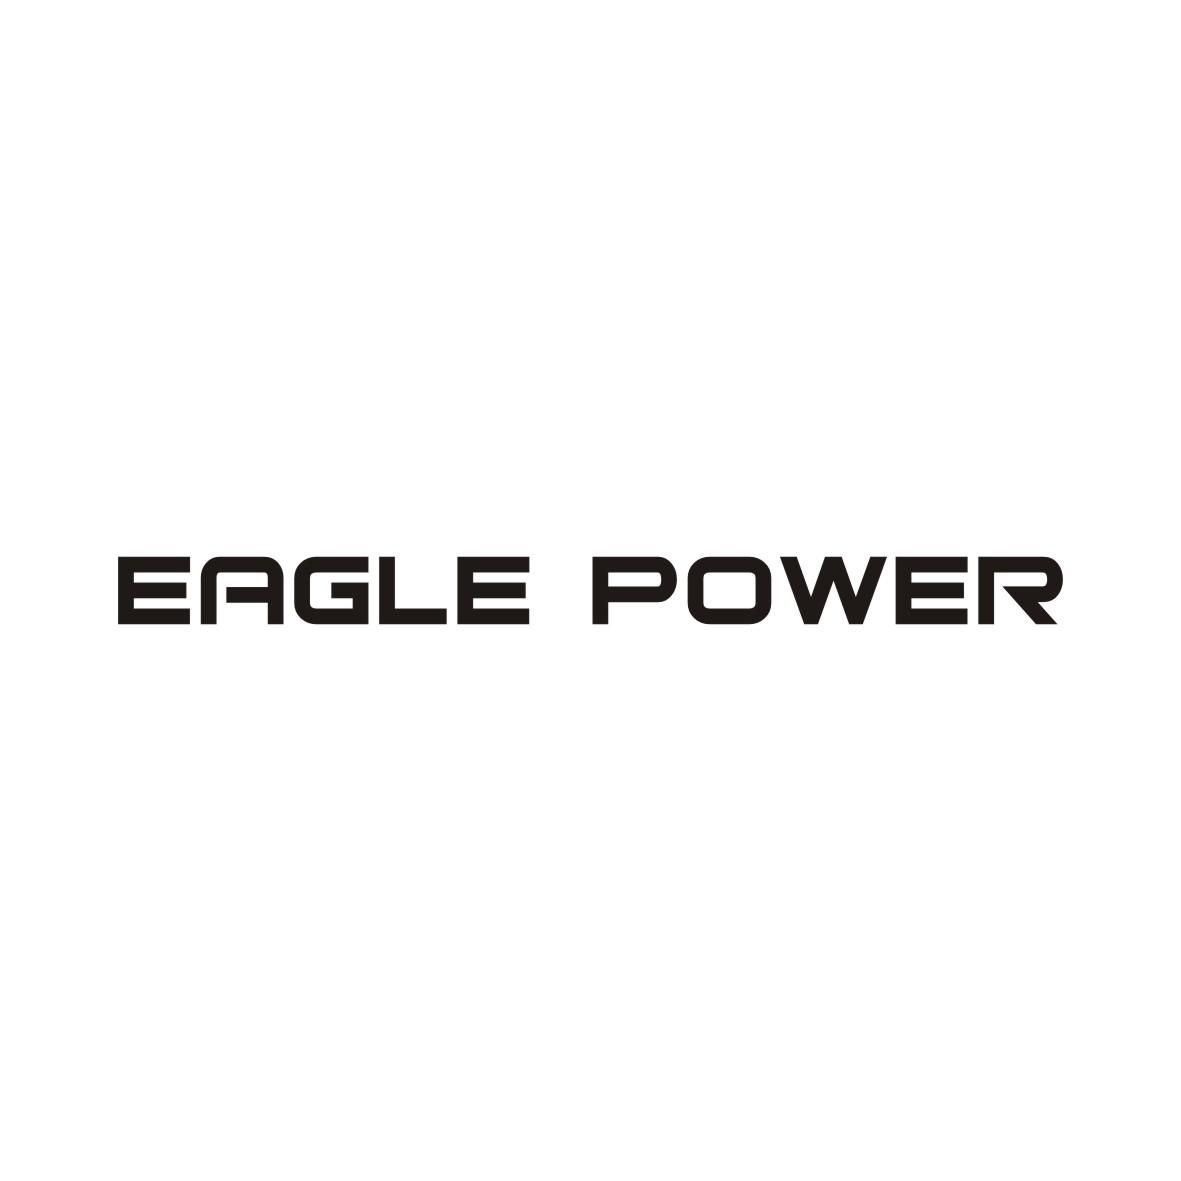 22类-网绳篷袋EAGLE POWER商标转让